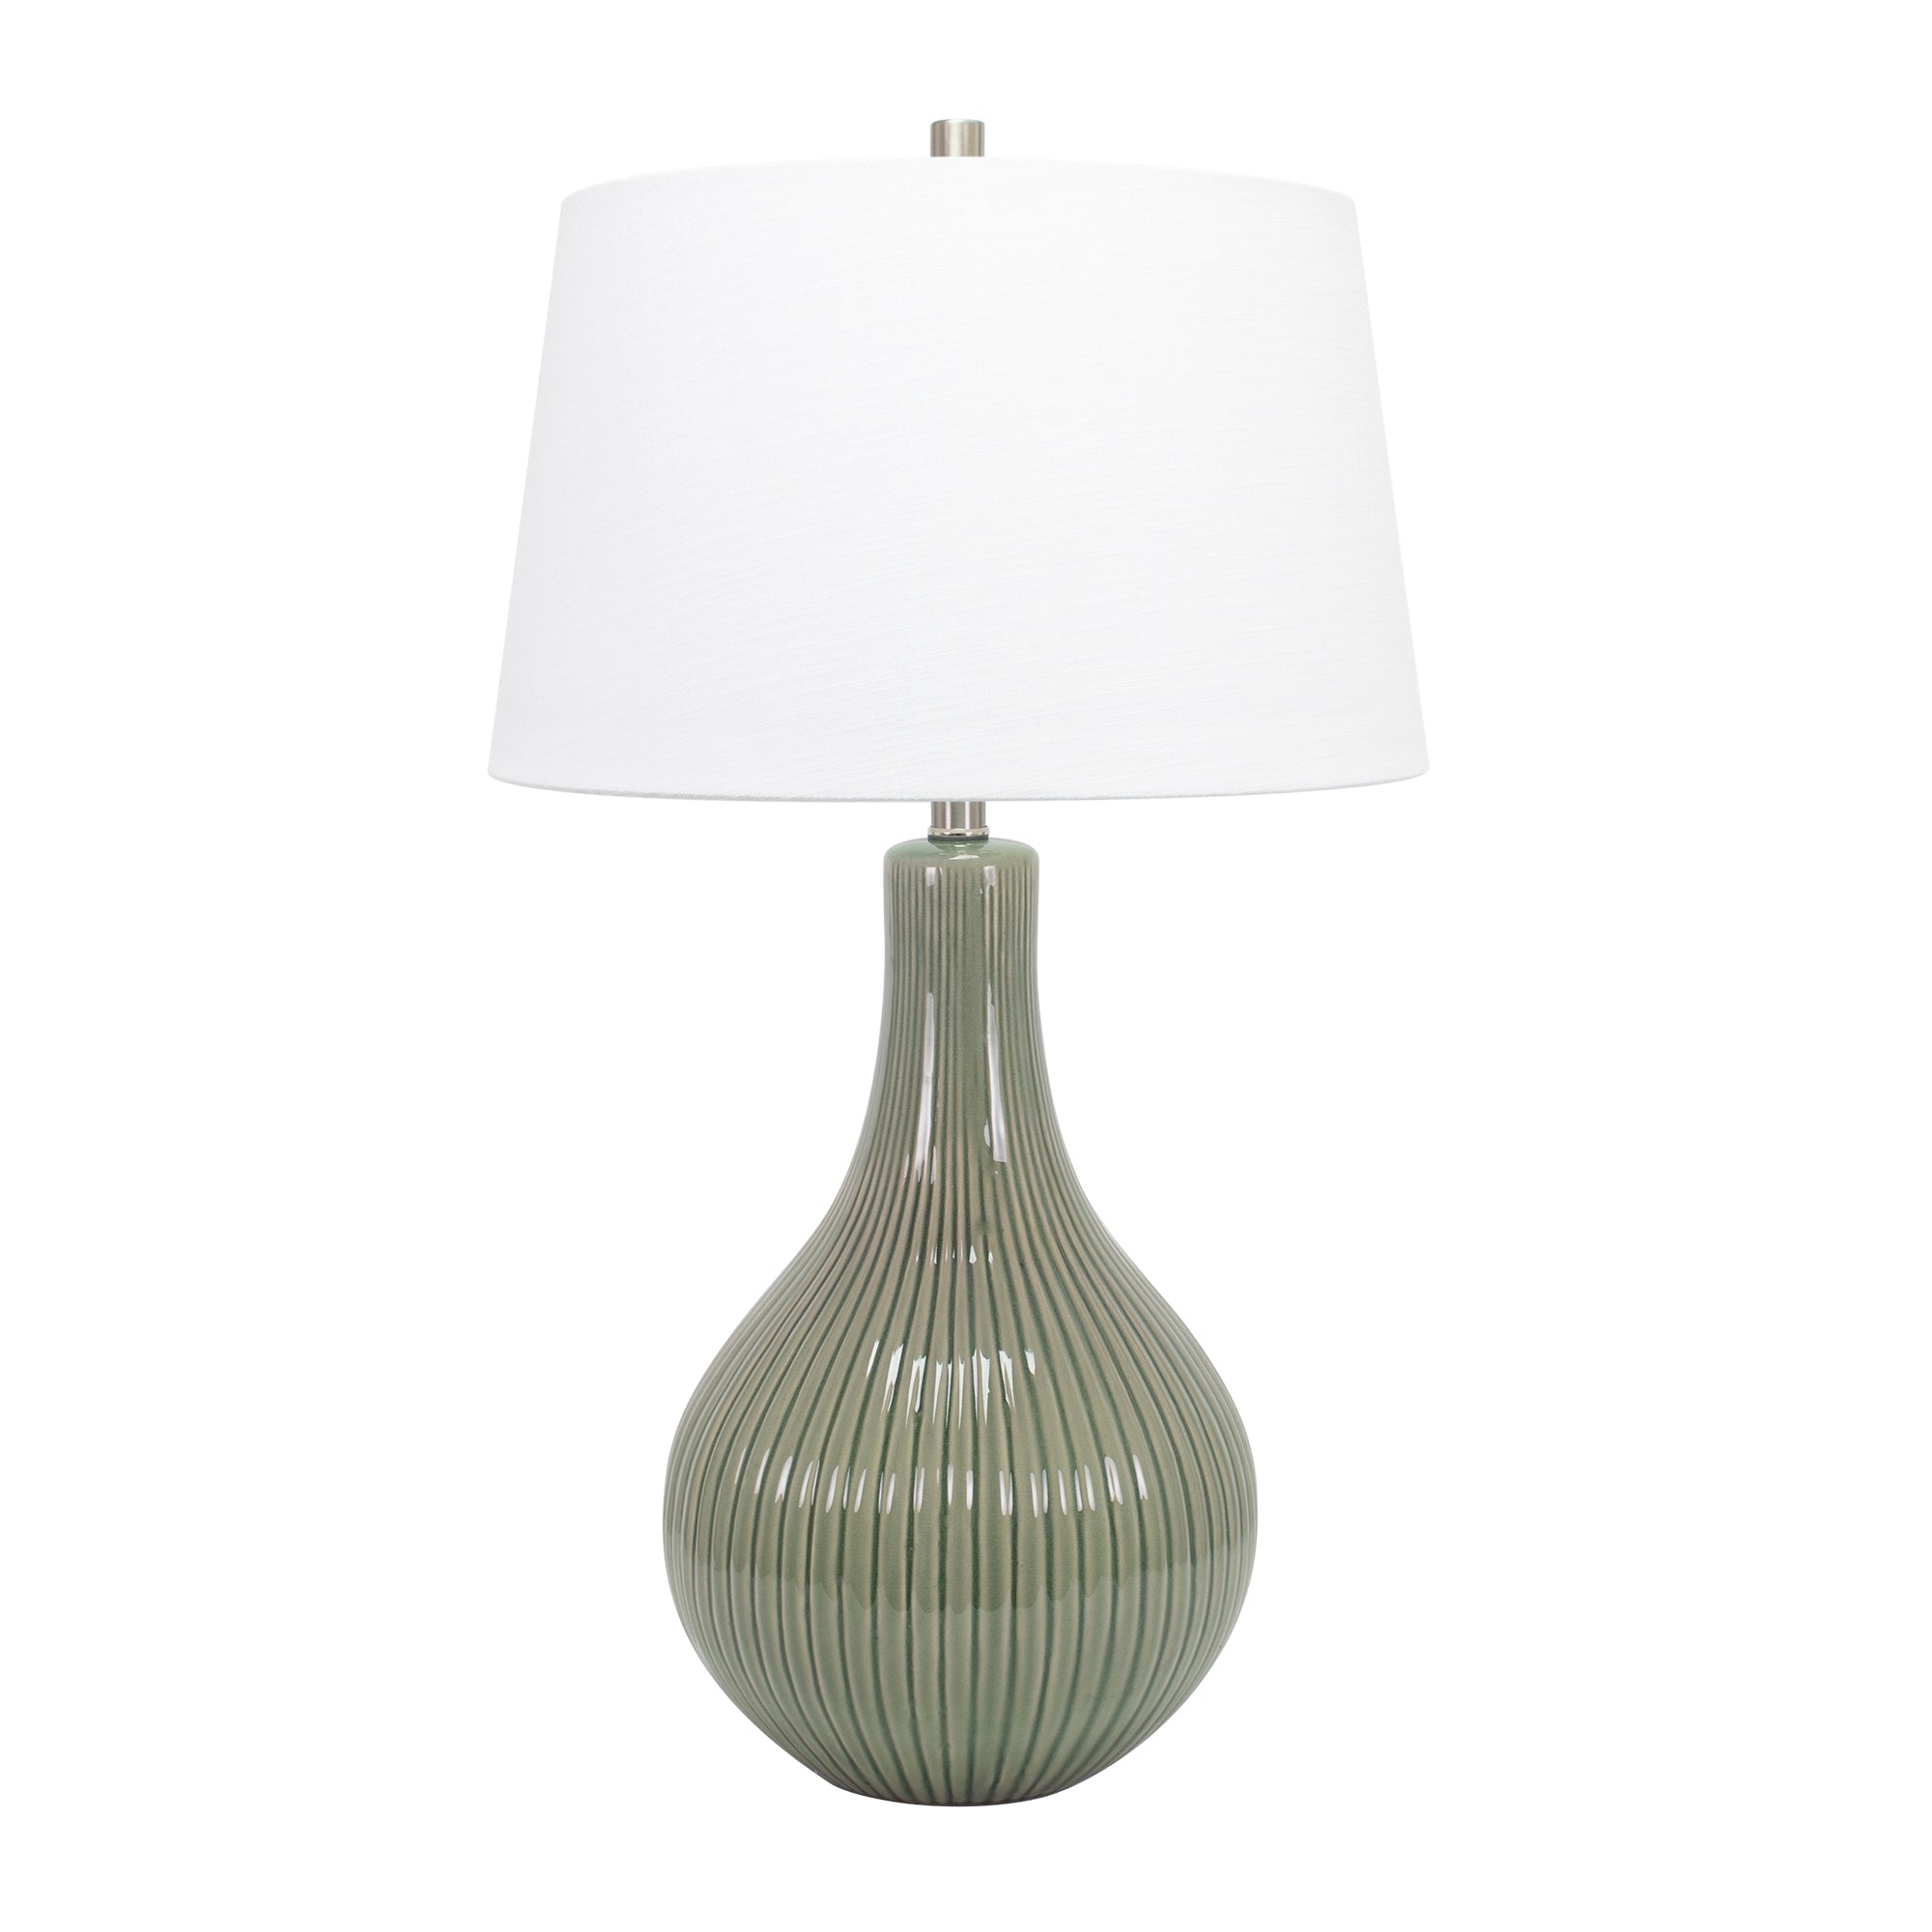 Lize Table Lamp - Celedon - Couture Lamps